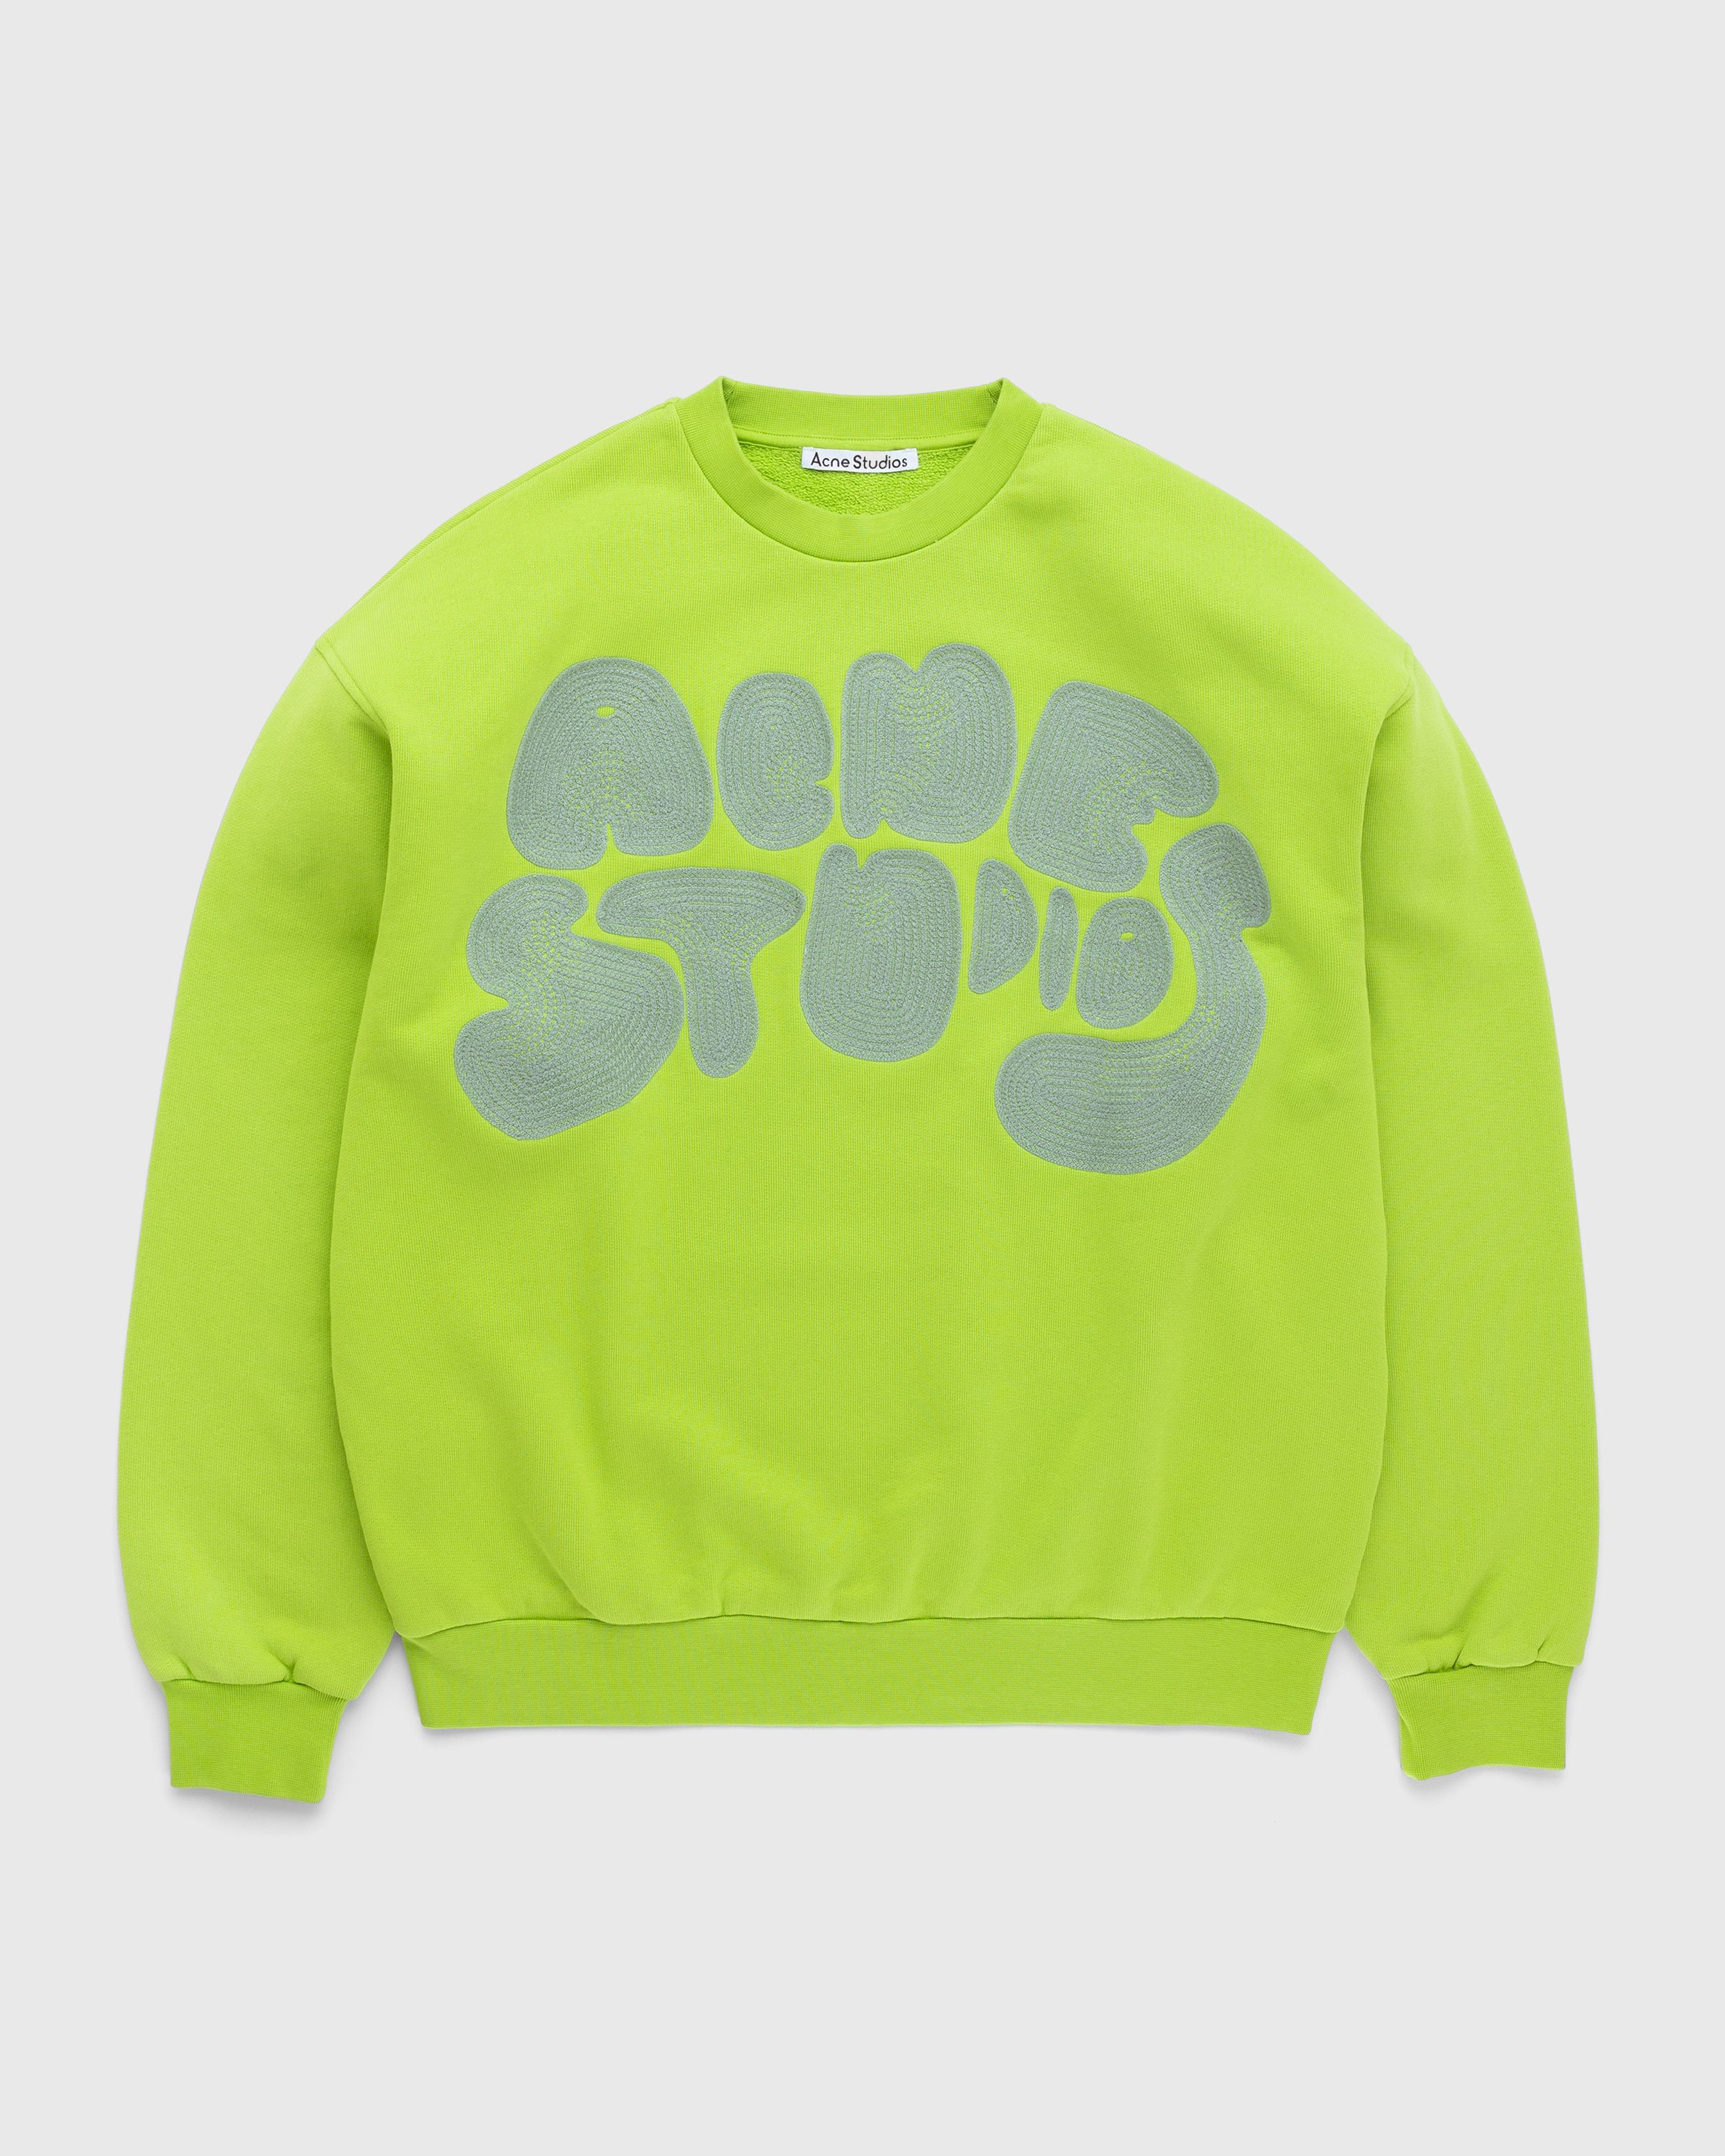 Acne Studios - Bubble Logo Crewneck Sweater Green - Clothing - Green - Image 1